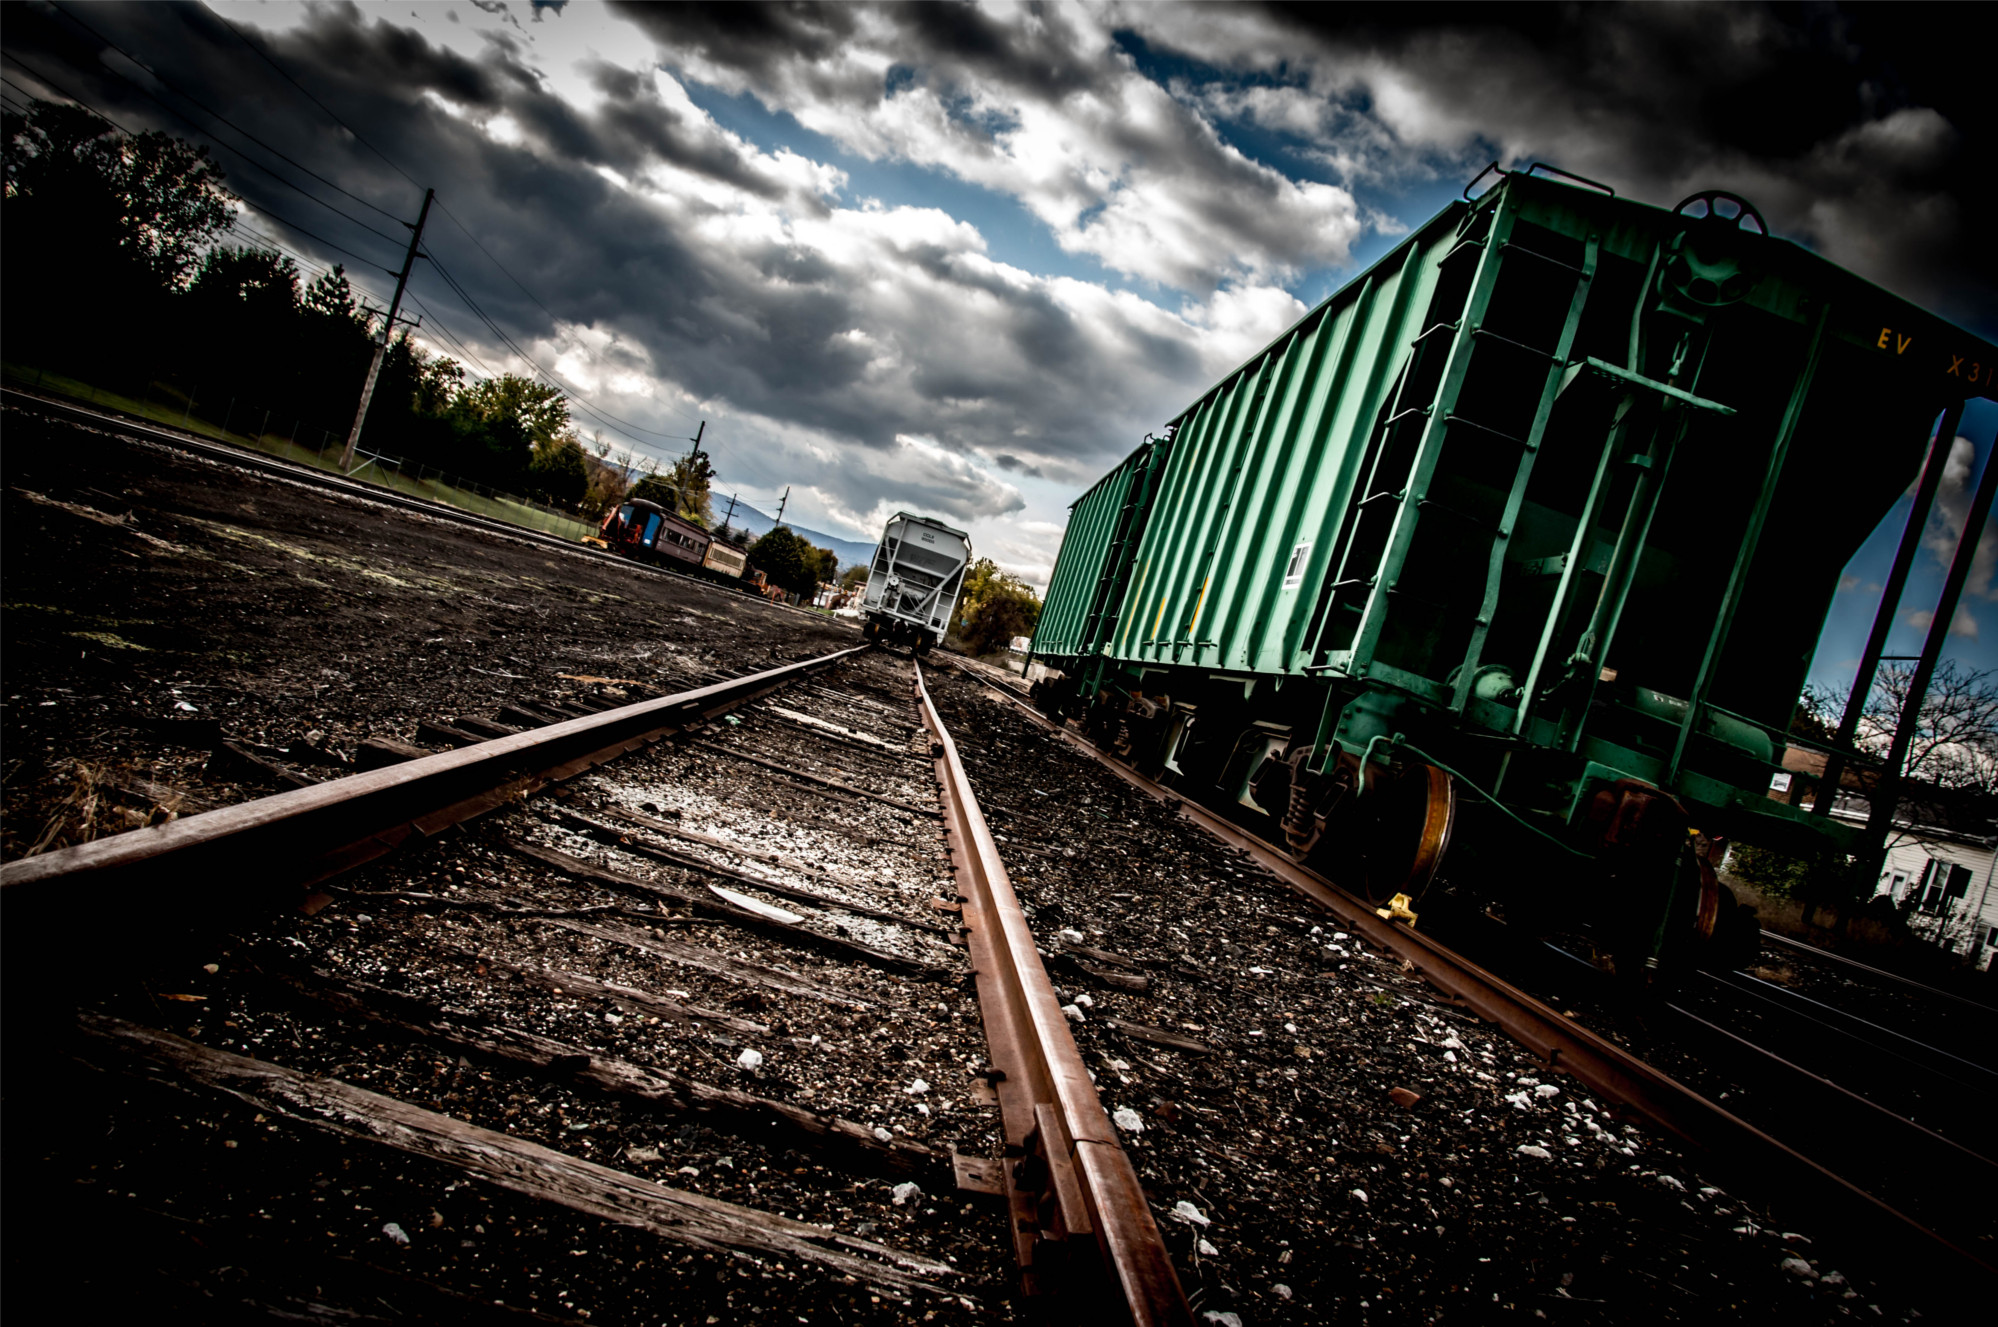 Railroad cars and tracks